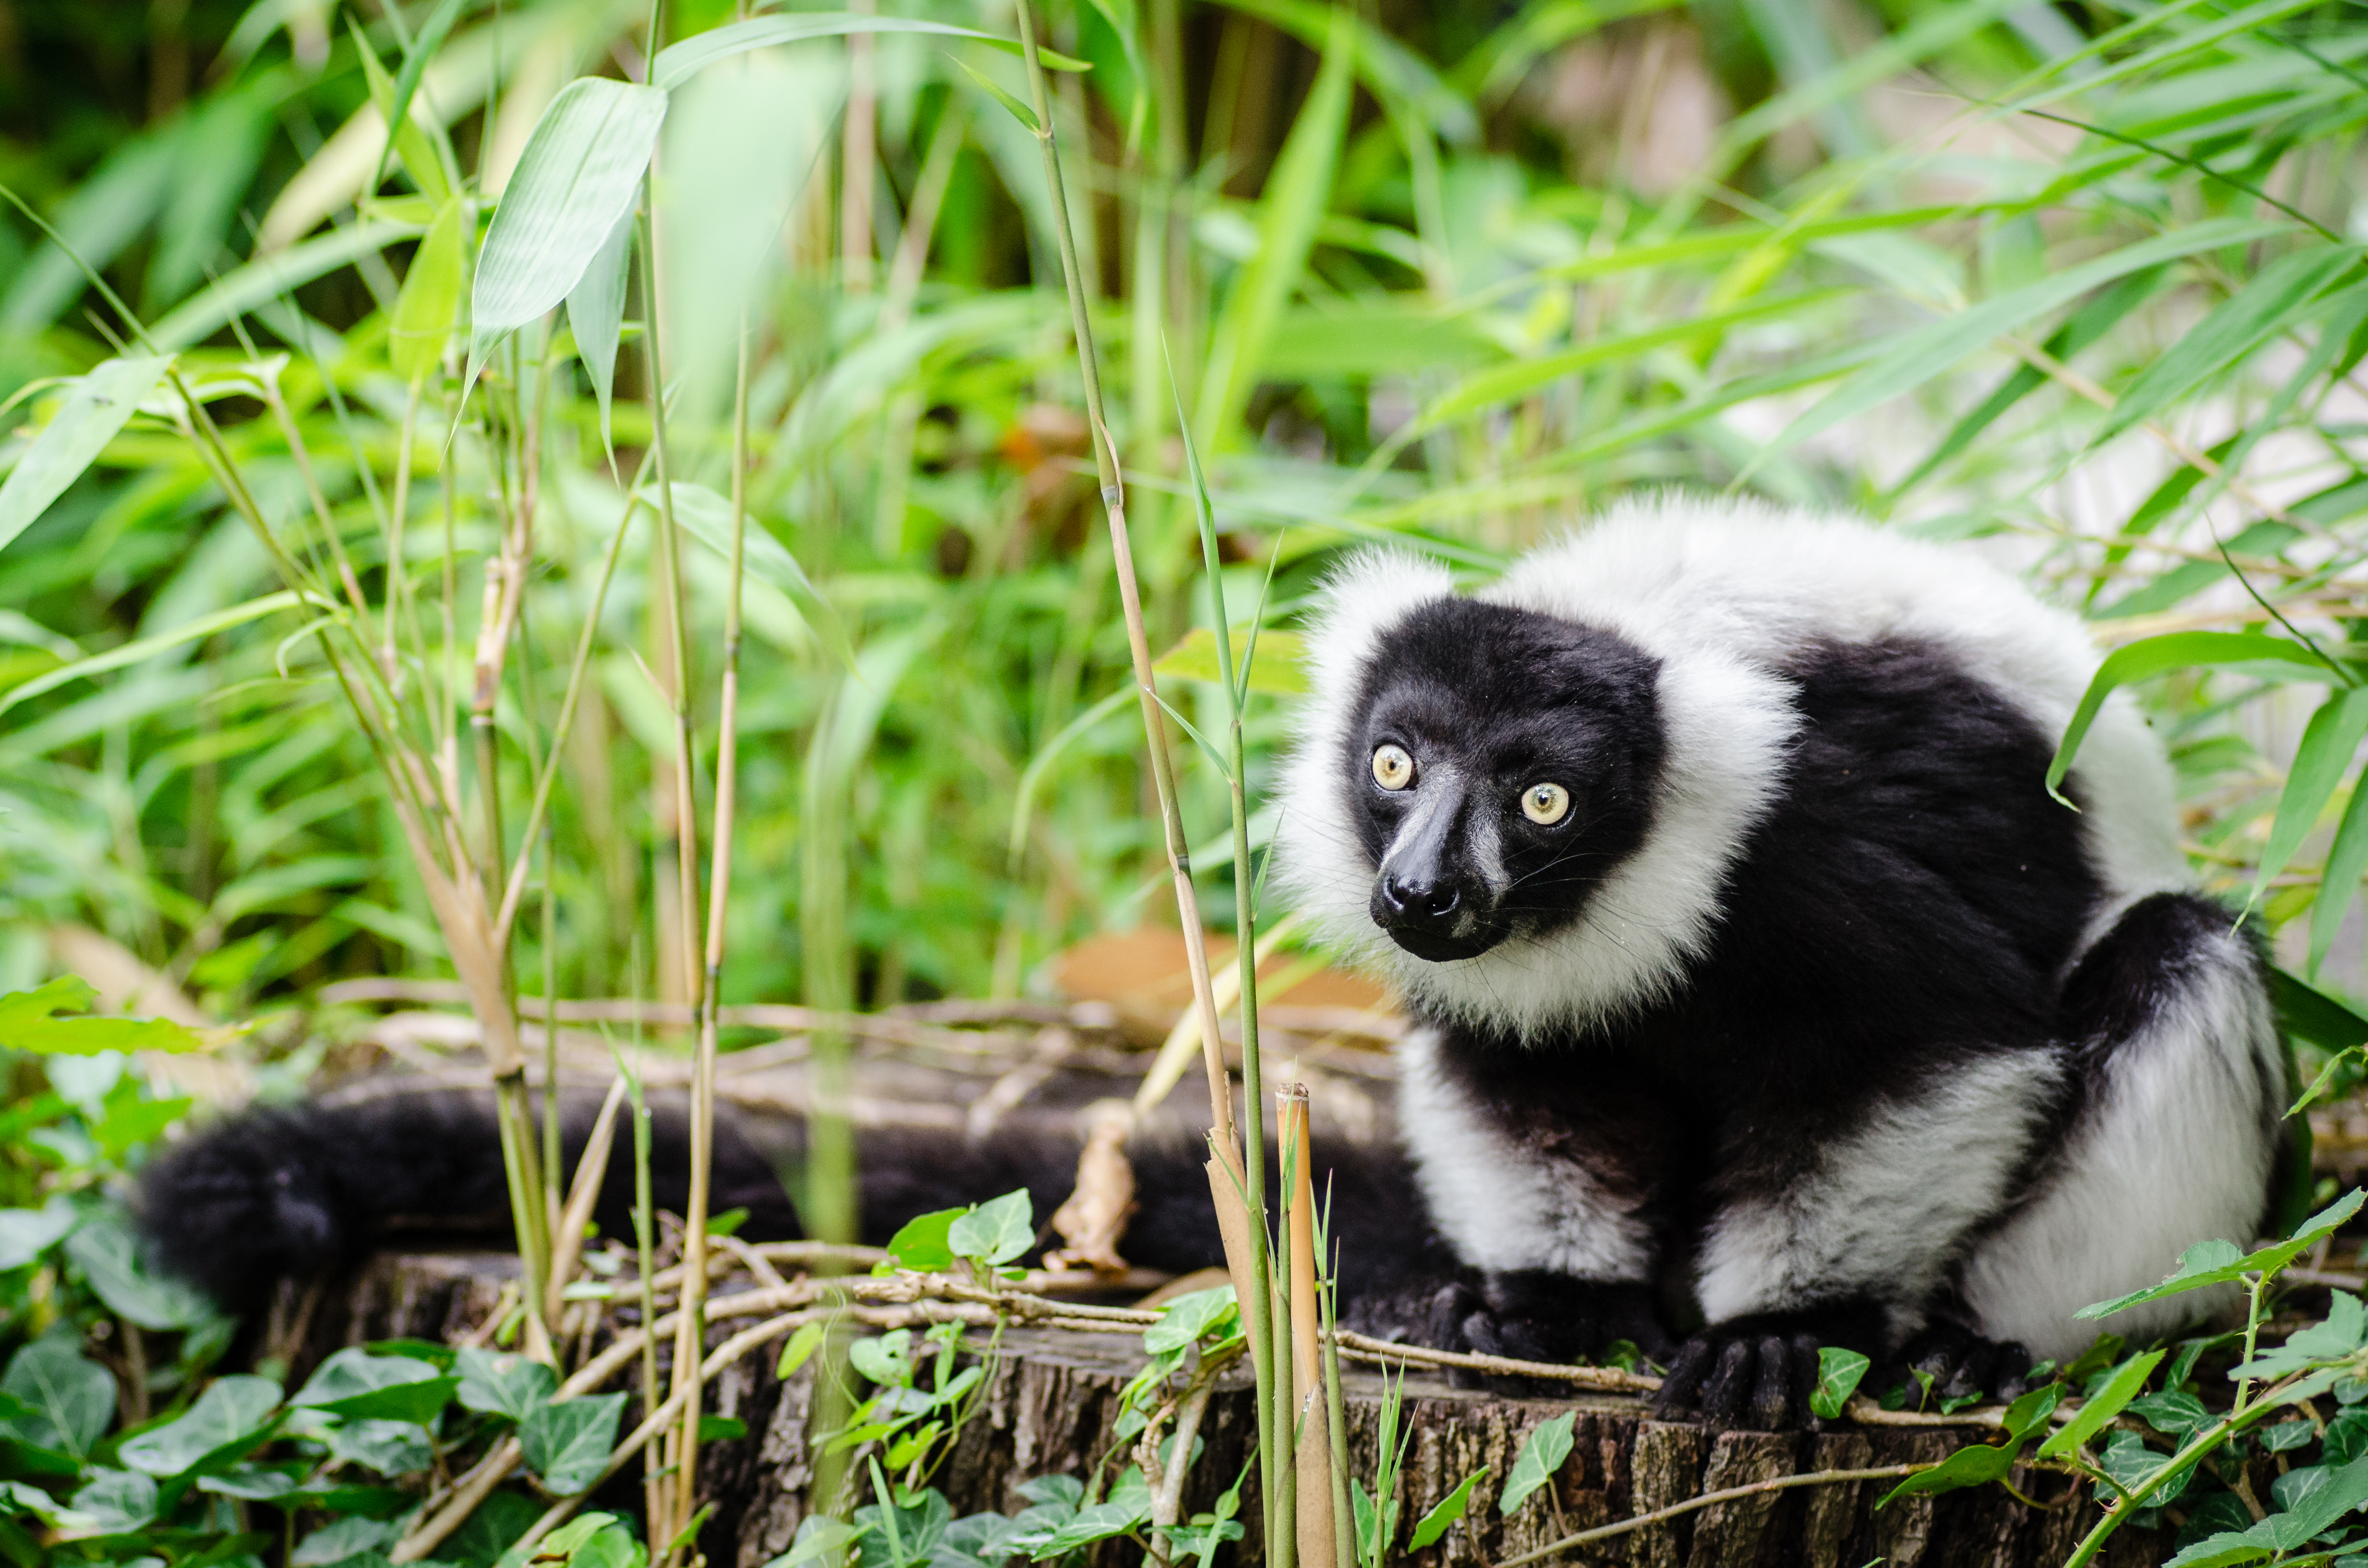 Black-and-white ruffed lemur photo